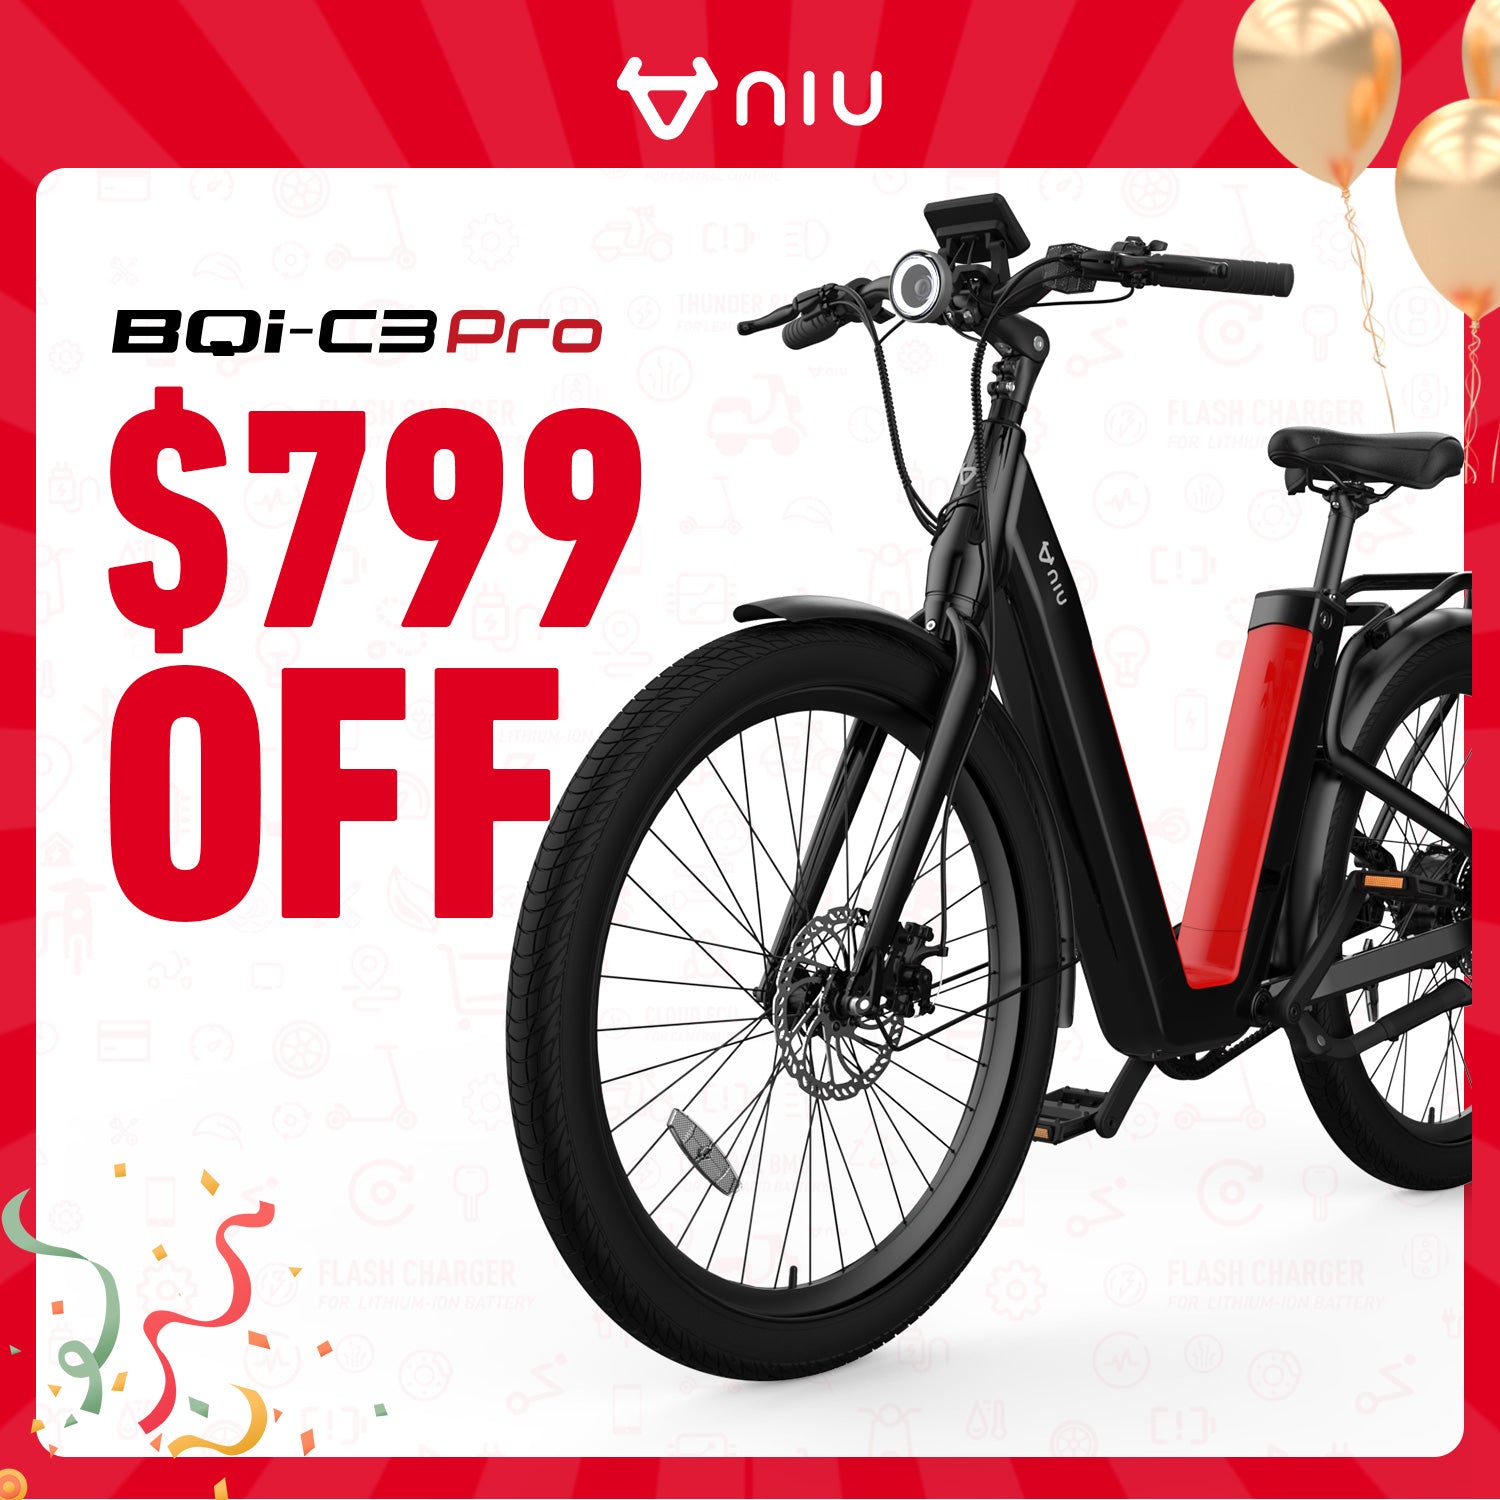 NIU BQi-C3 Pro Bike